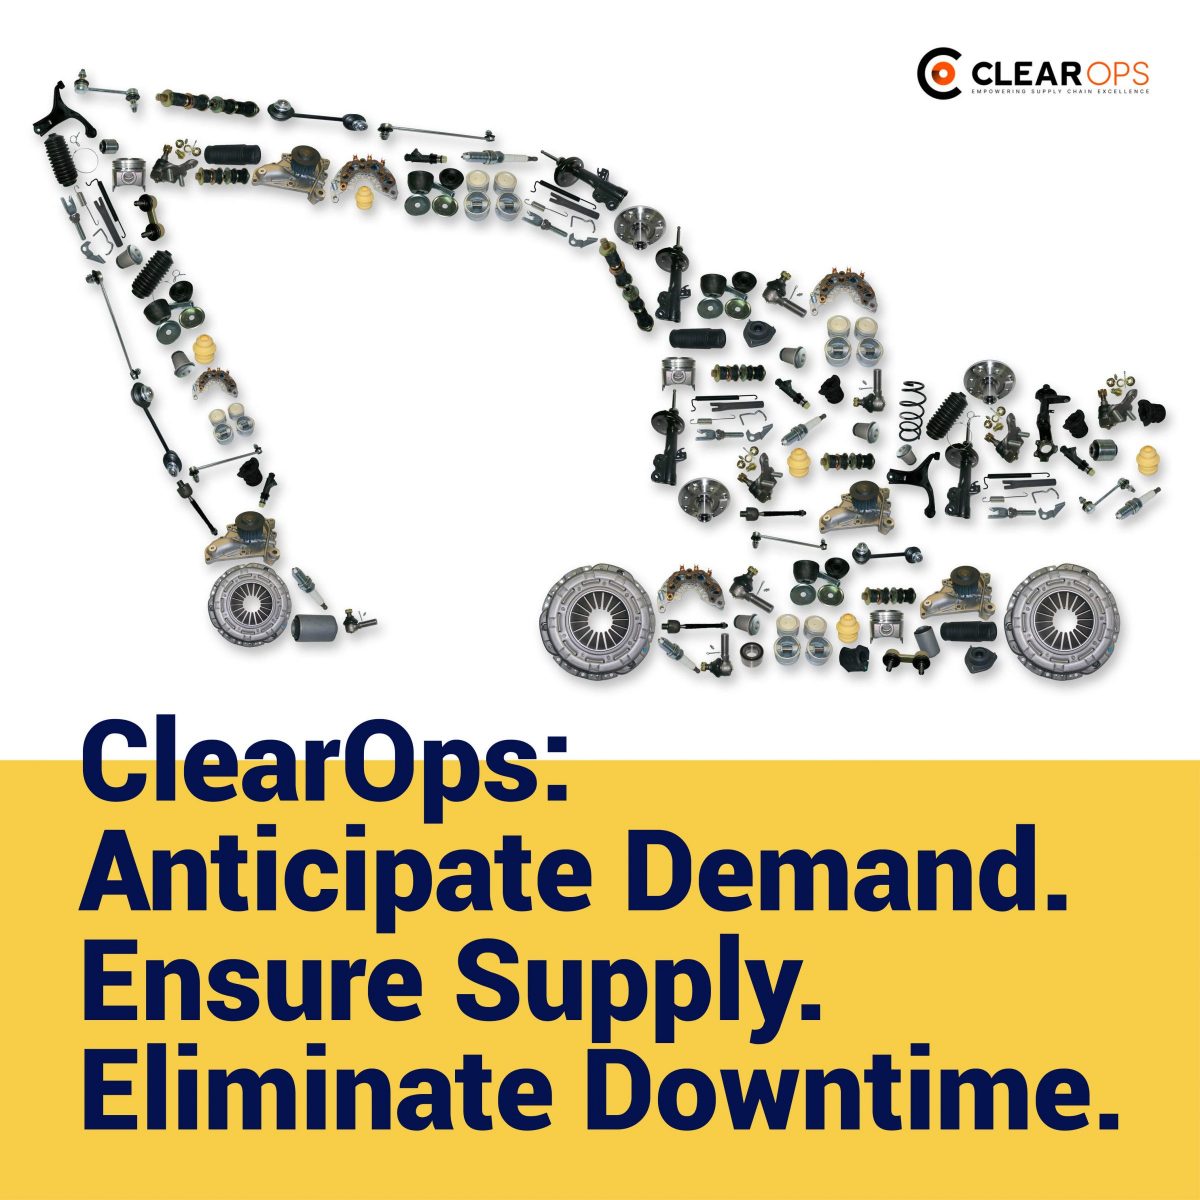 ClearOps GmbH